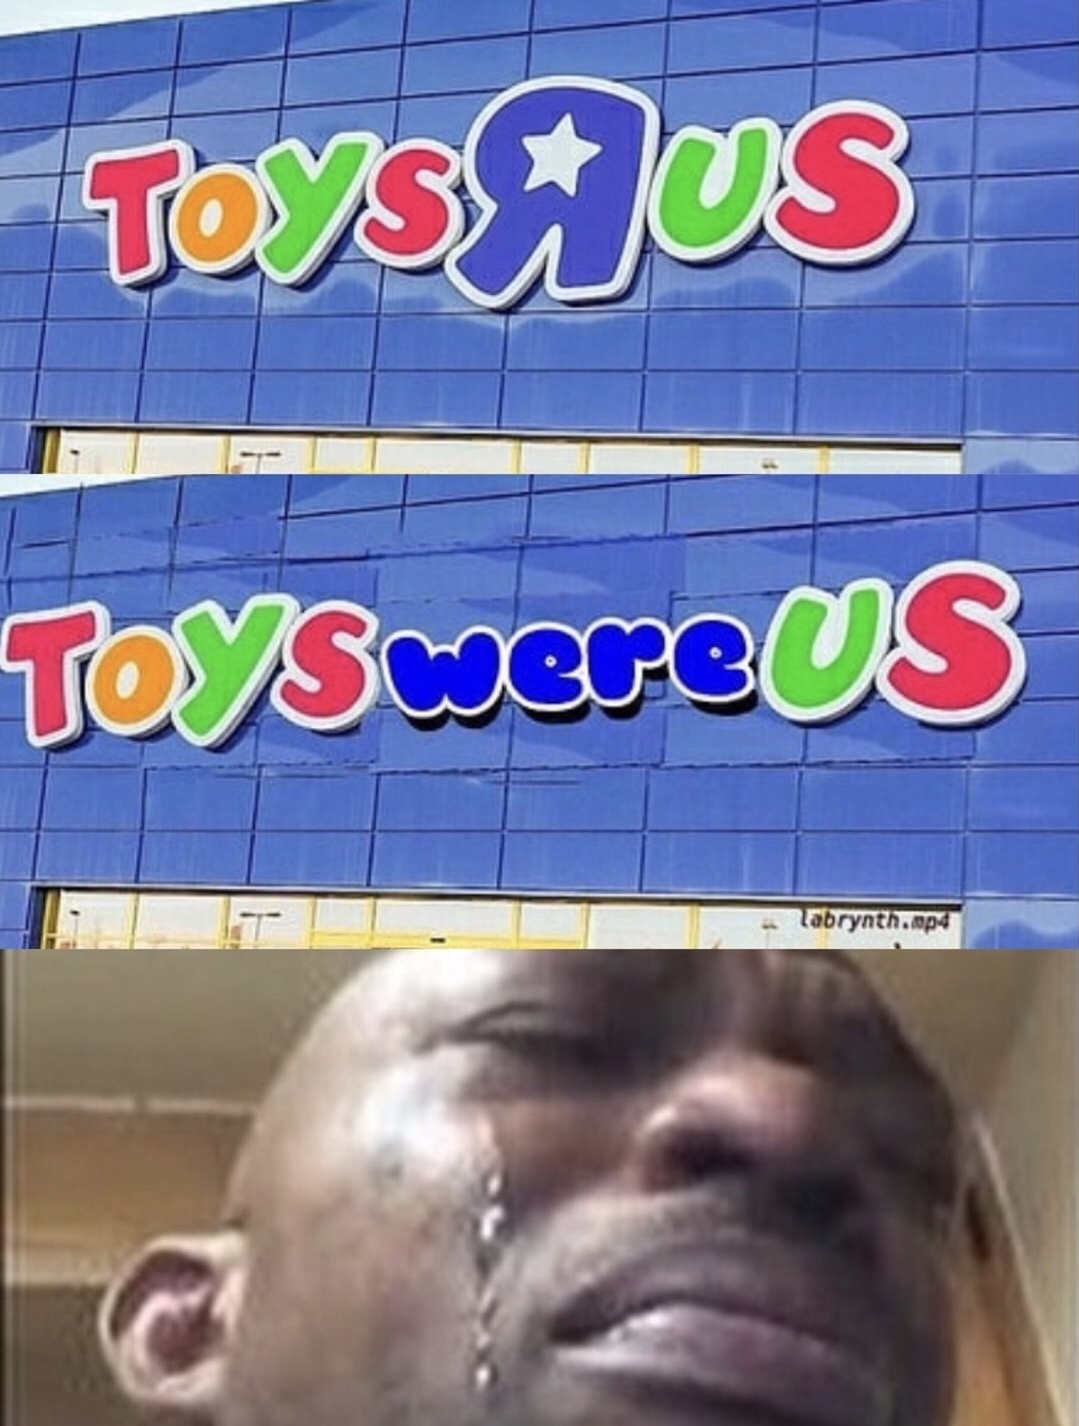 toysrus meme - Toysmus Toys were us labrynth.mp4